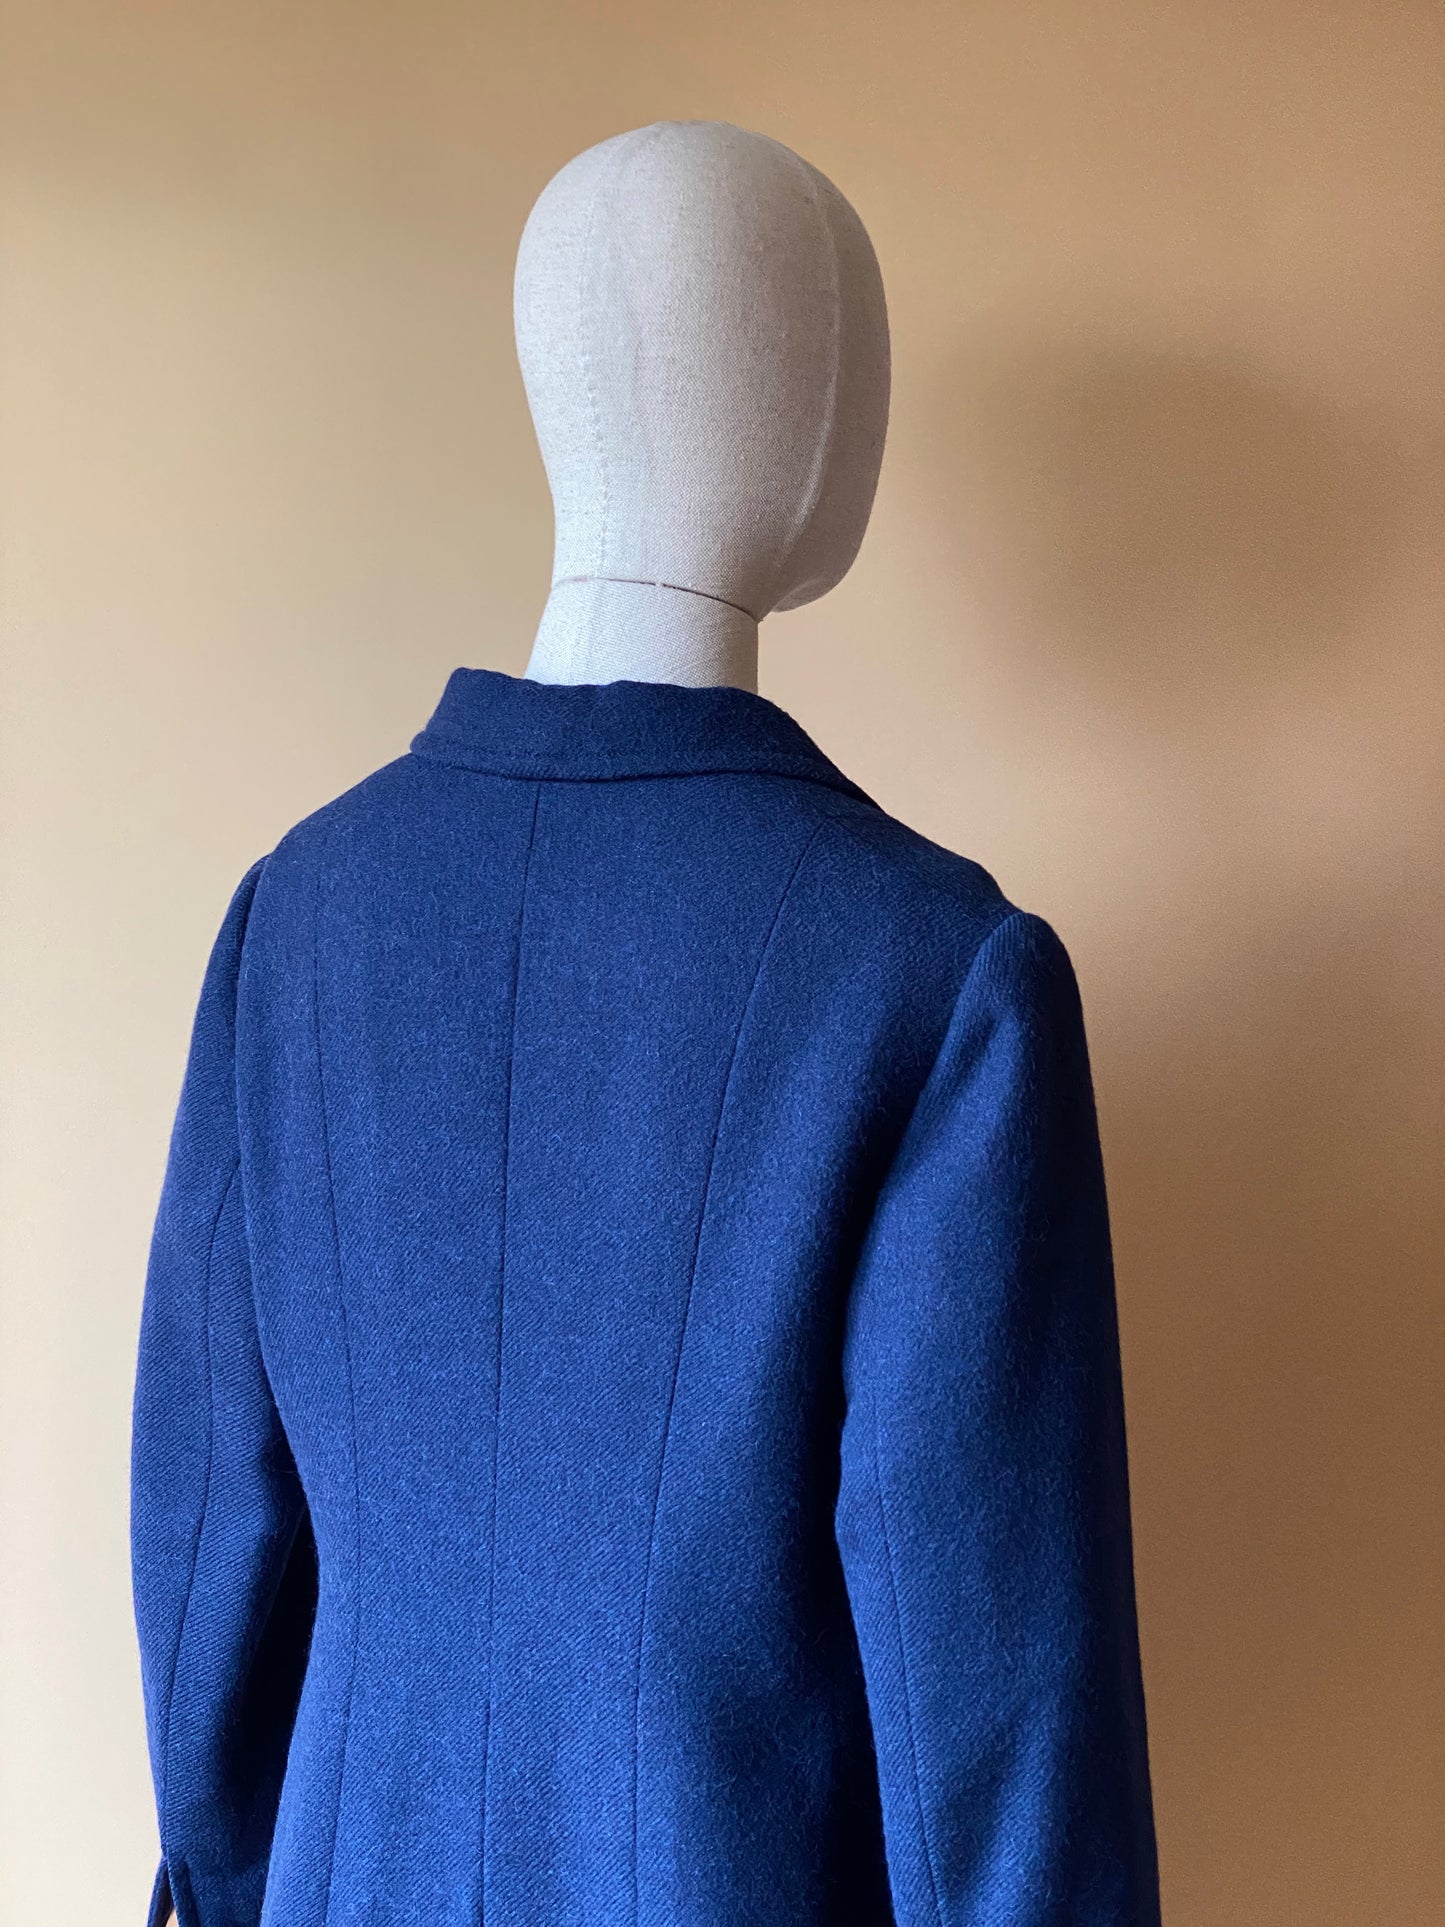 Vintage Tailored Blue Coat